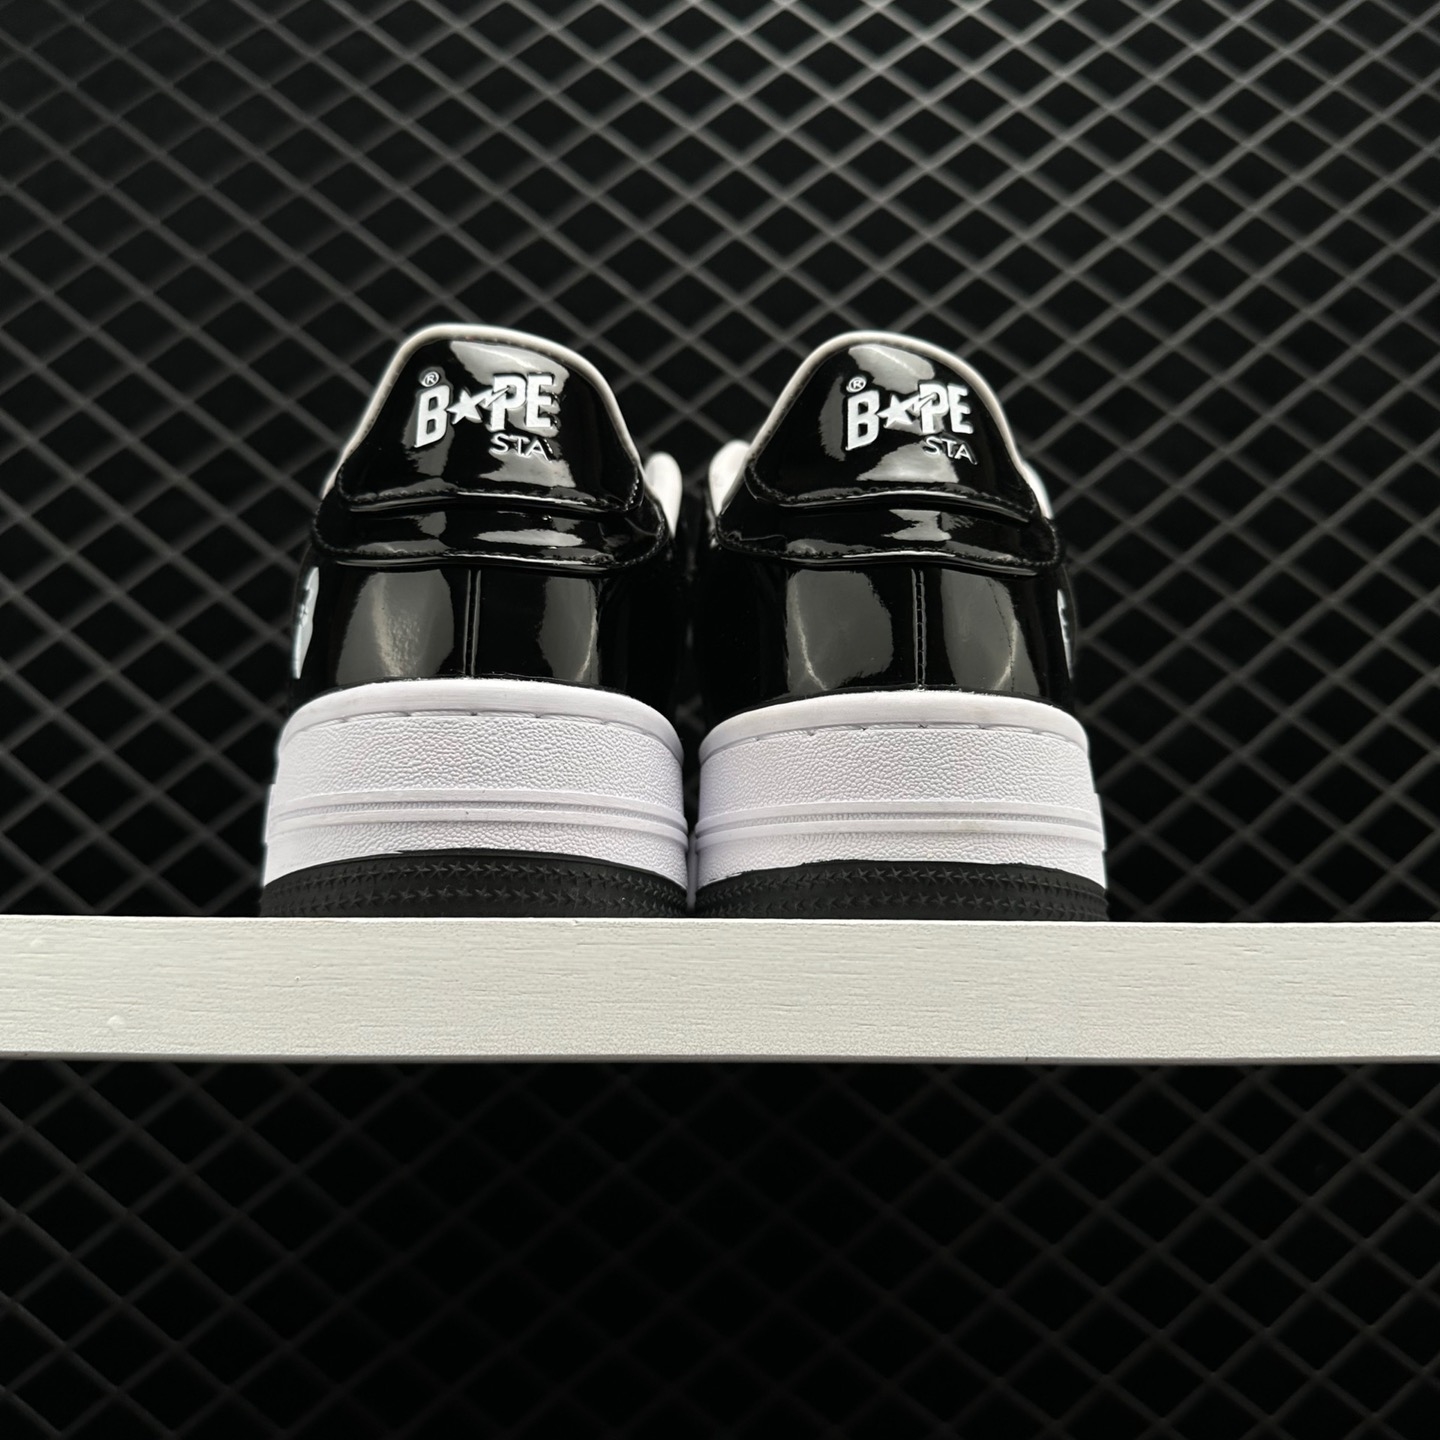 A BATHING APE Bape Sta Black White 1I70191002 BLK - Trendy and Stylish Fashion Footwear